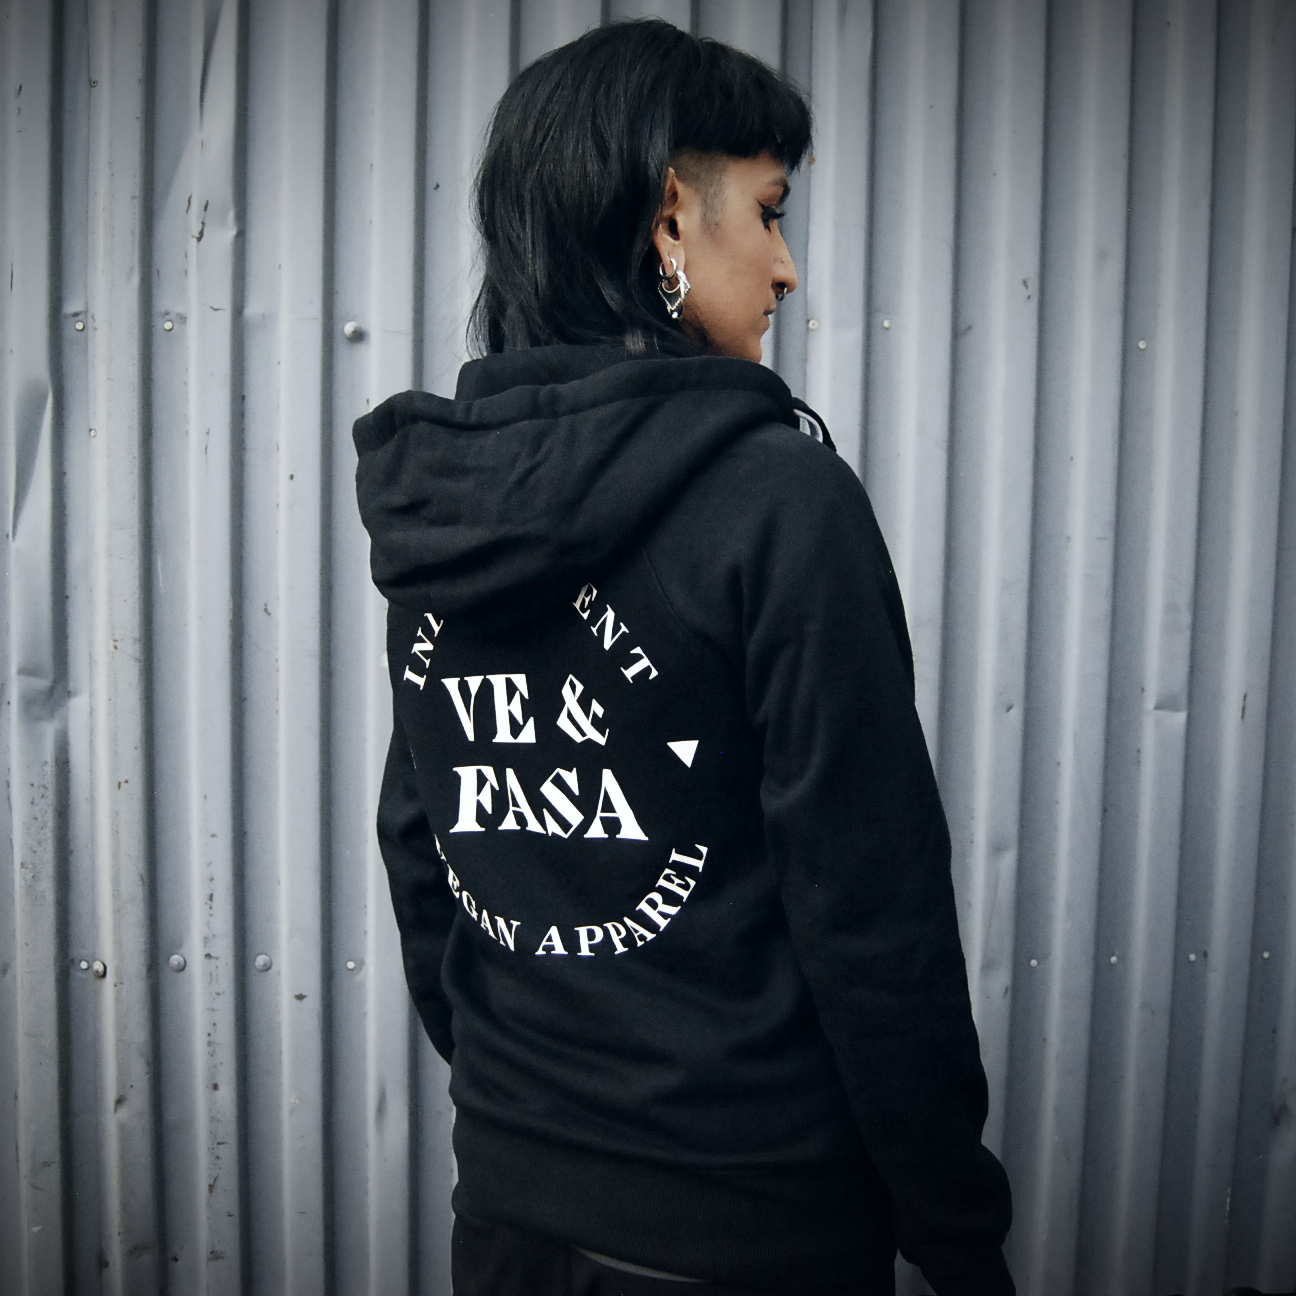 Ve & fasa logo hoodie (XS)